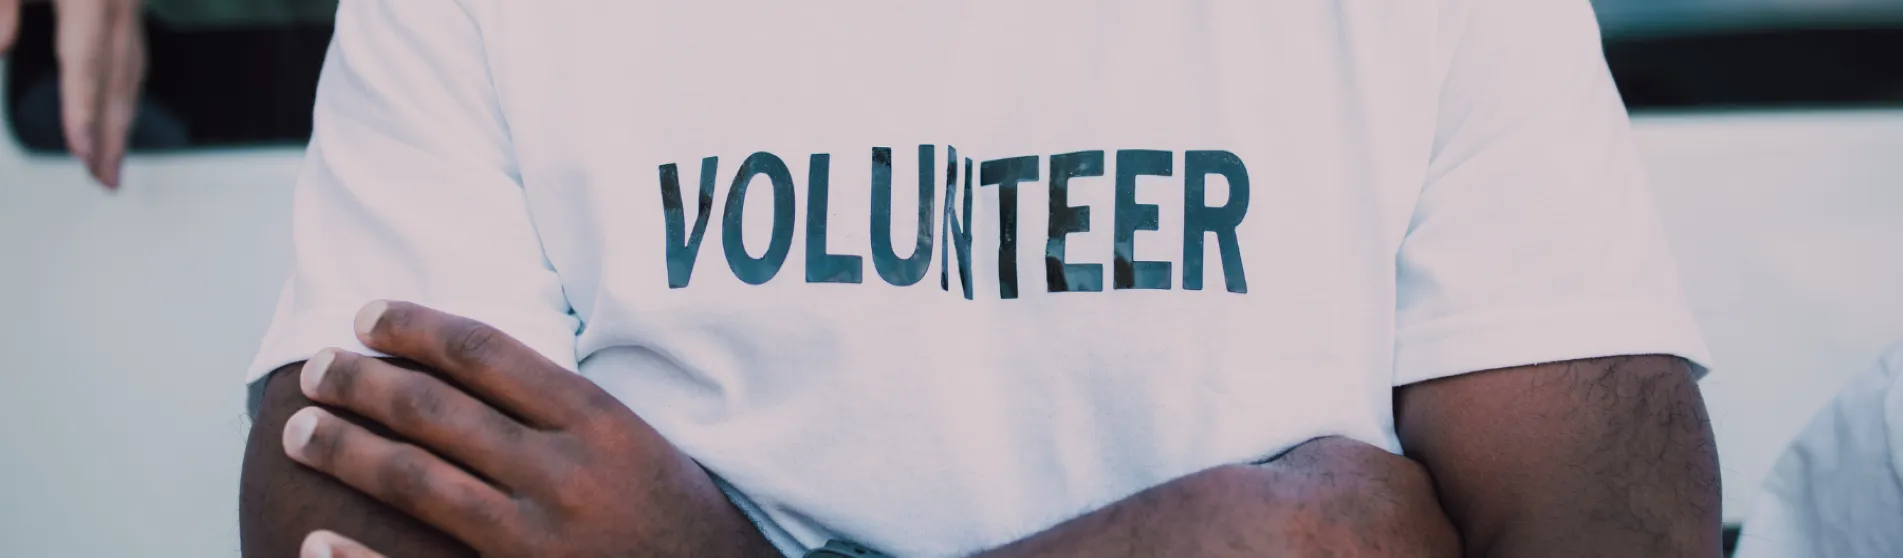 Volunteer wearing a t-shirt that reads 'VOLUNTEER'